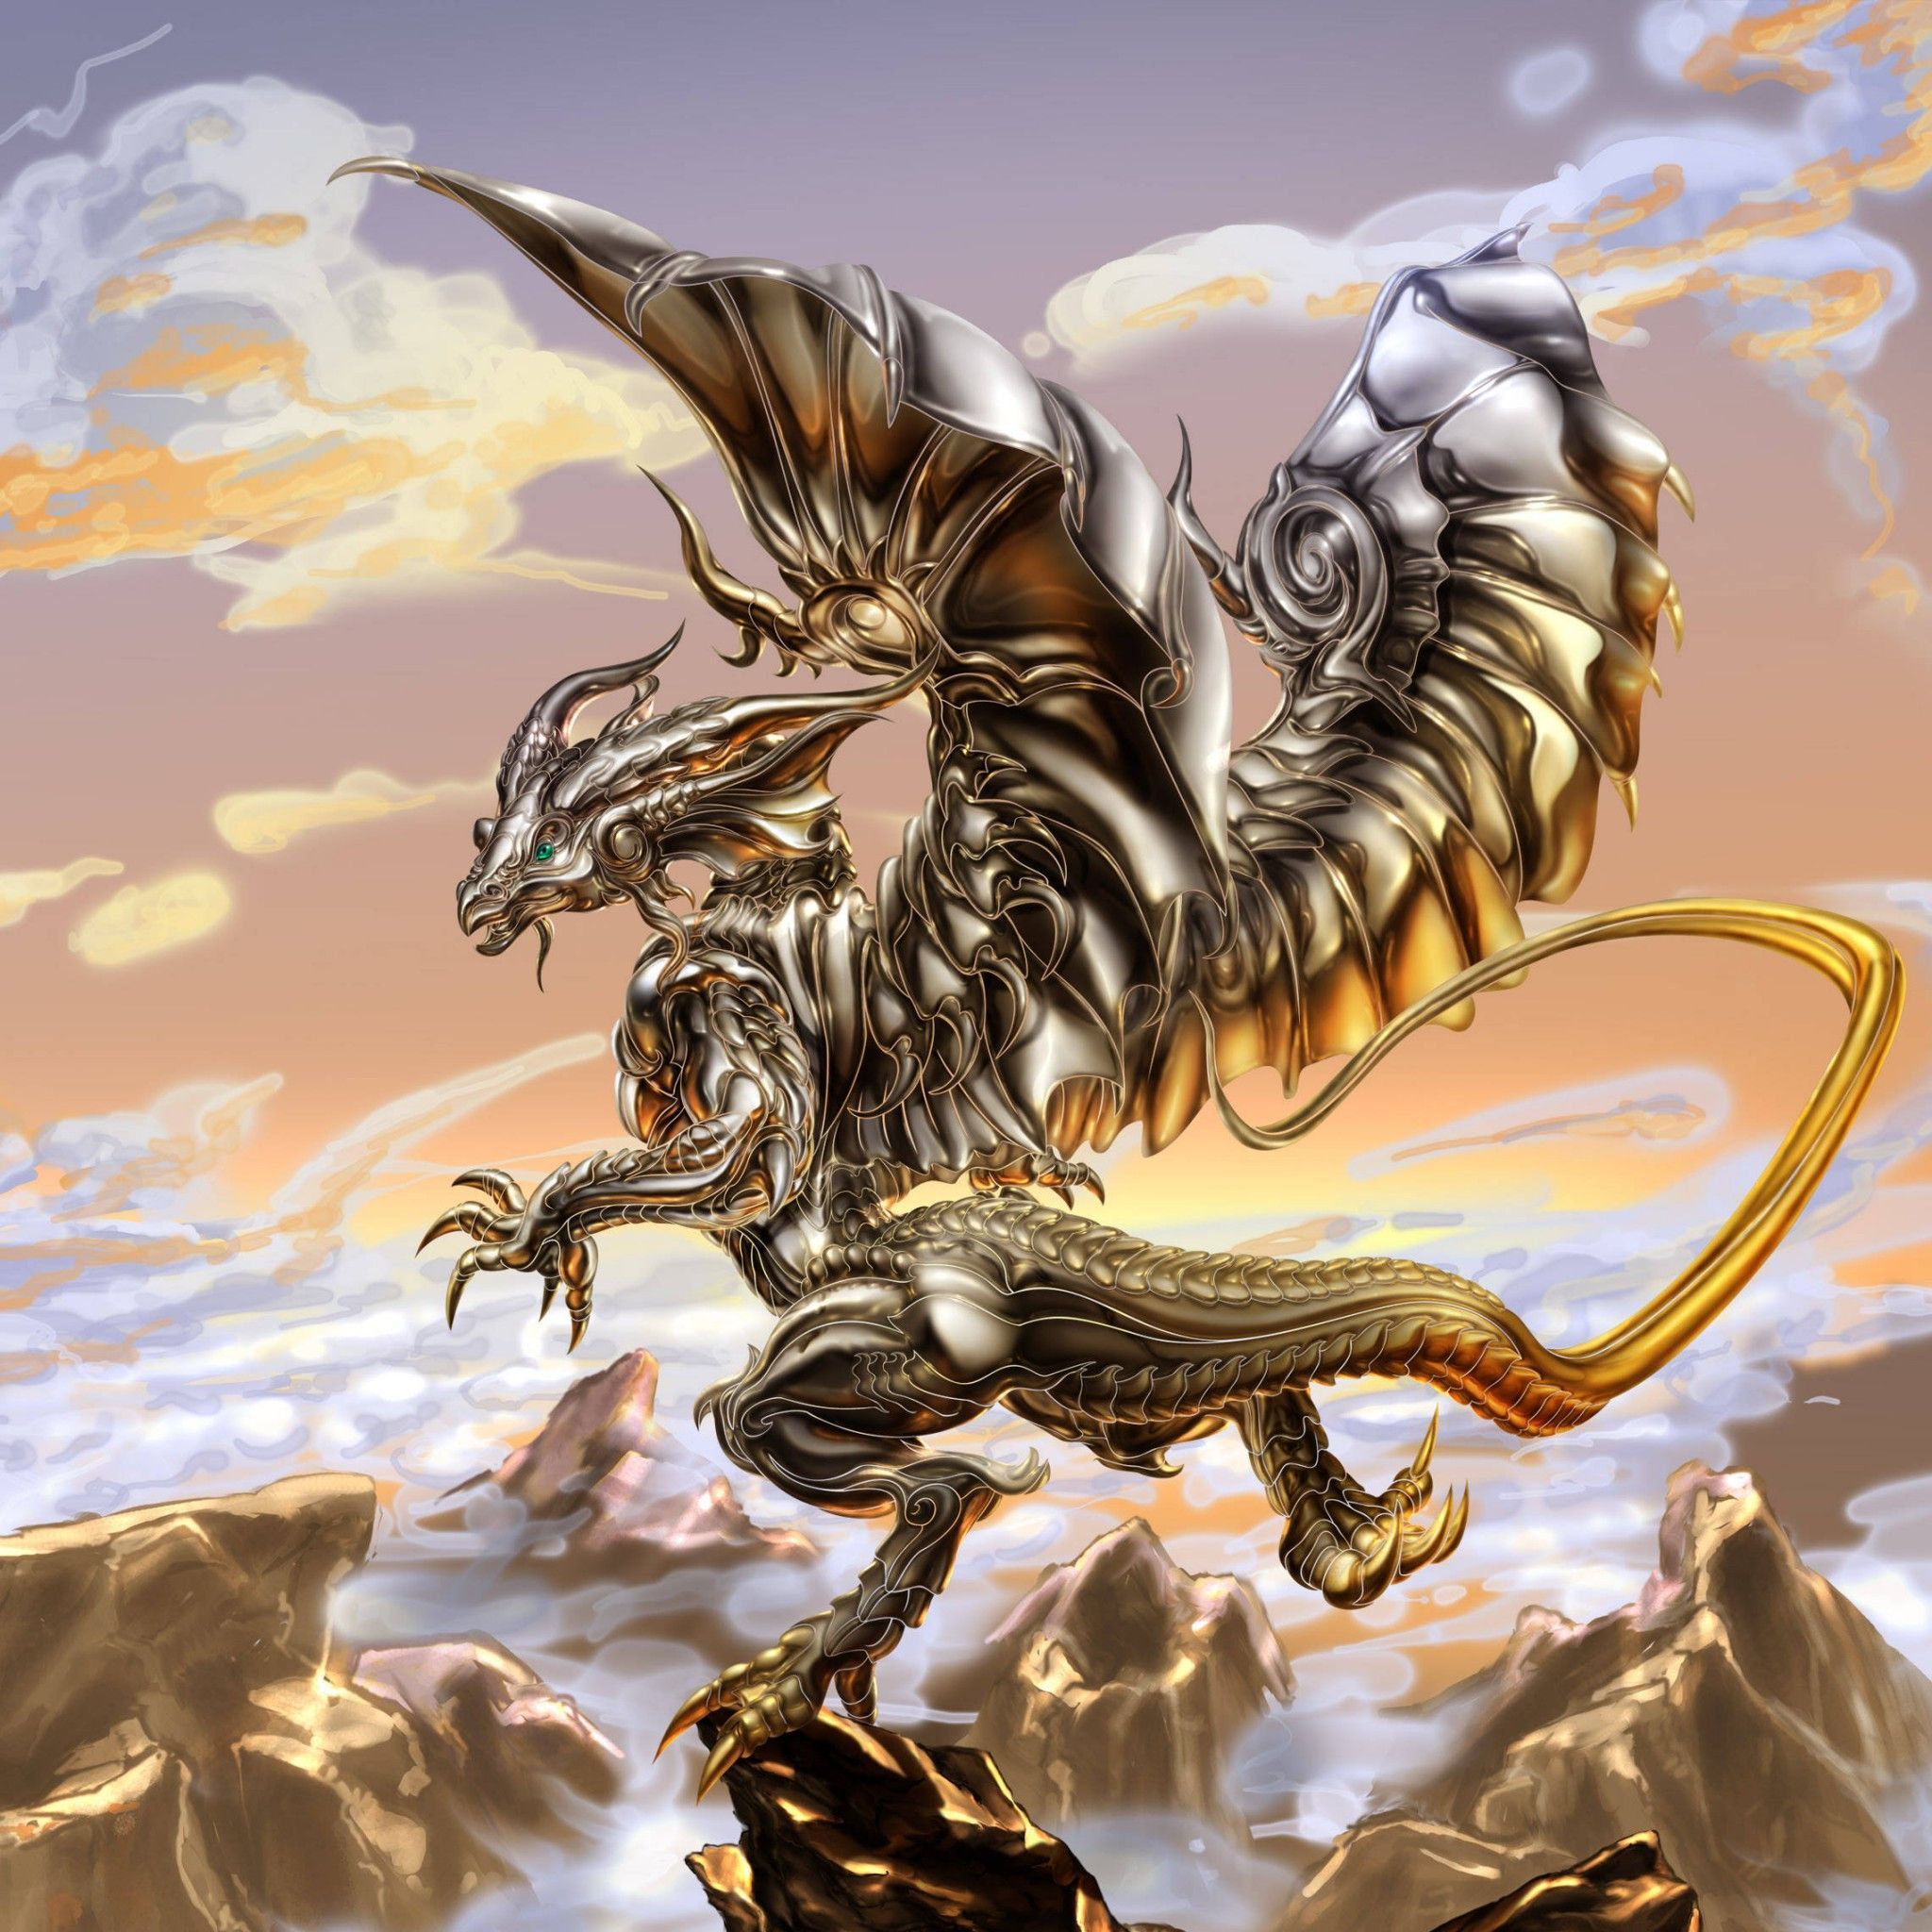 Metal Dragon to see more aweome mighty Dragon wallpaper!. Dragon art, Dragon picture, Beautiful dragon